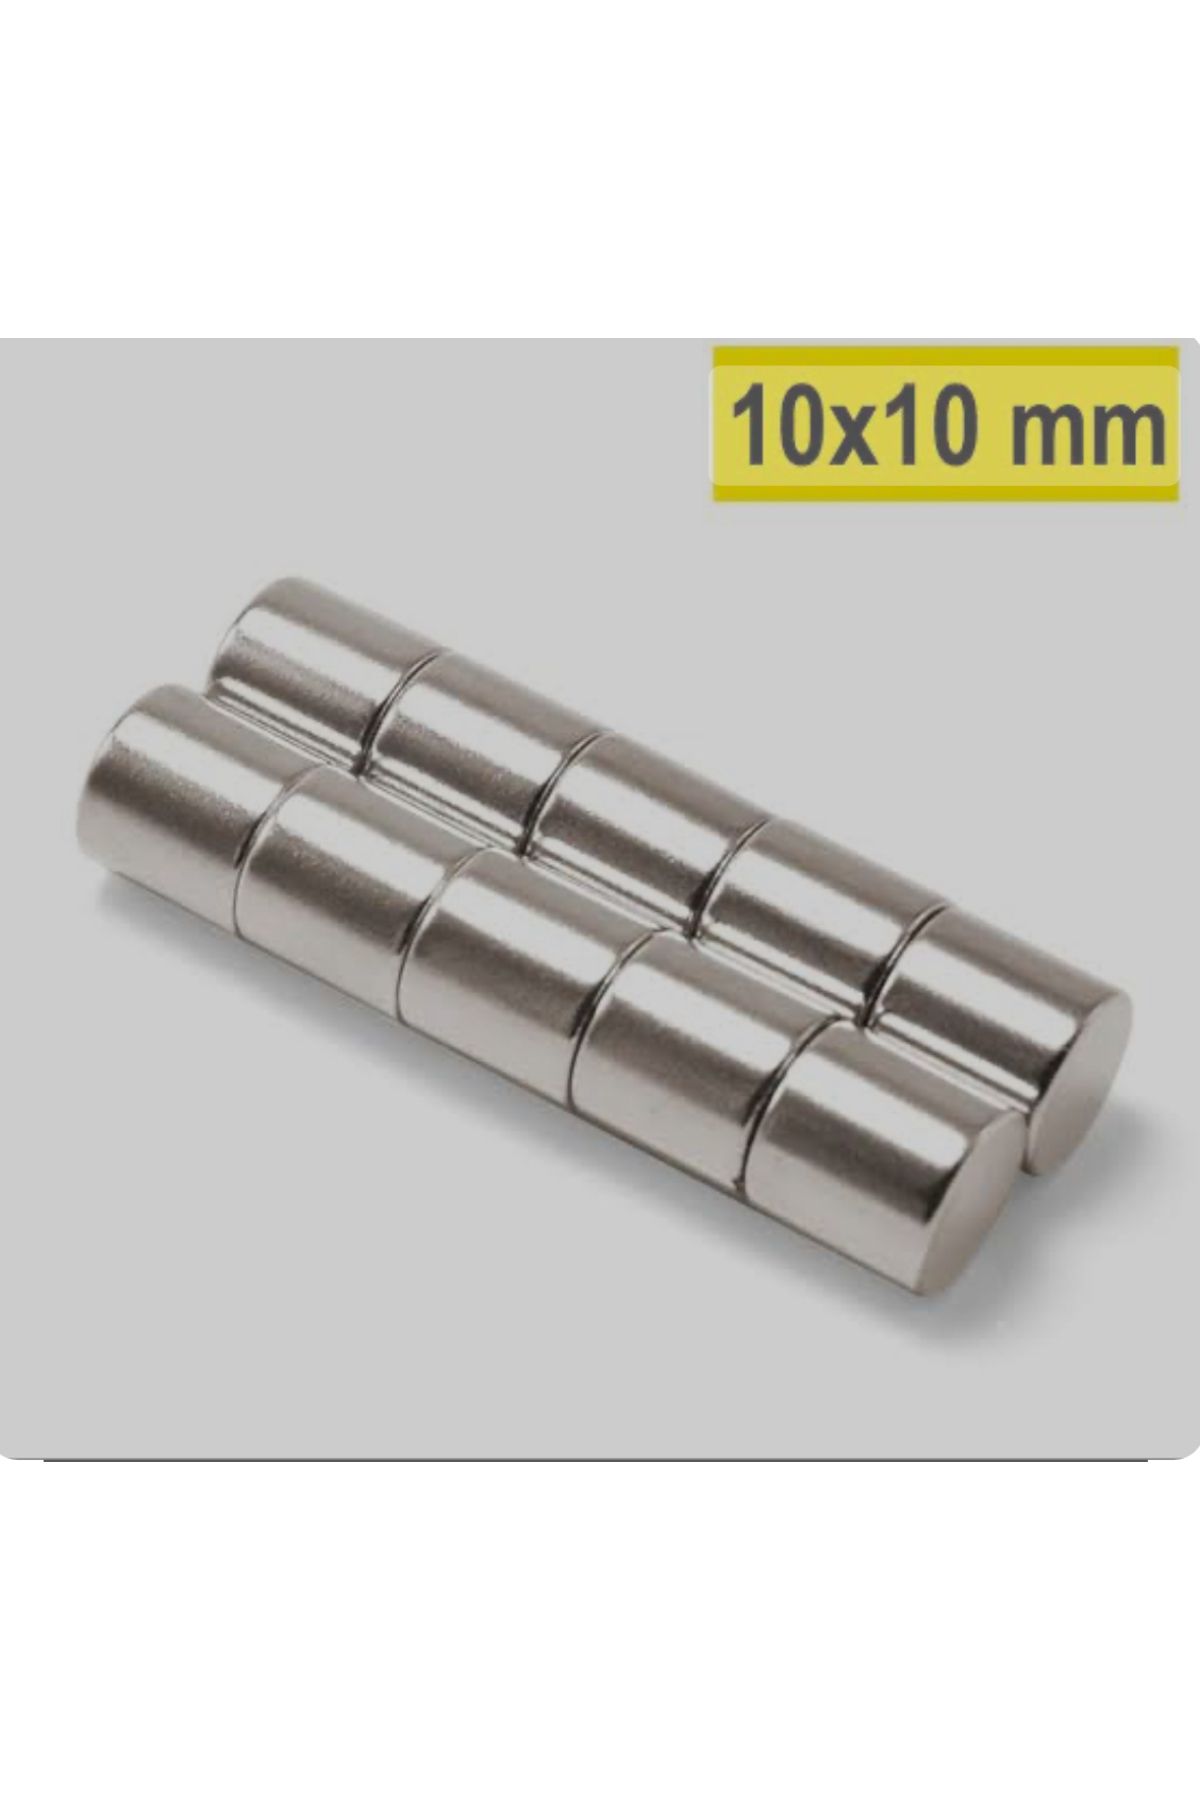 magnet market - 30 Adet 10x10mm - Çap 10mm X Kalınlık 10mm Neodymium Magnet